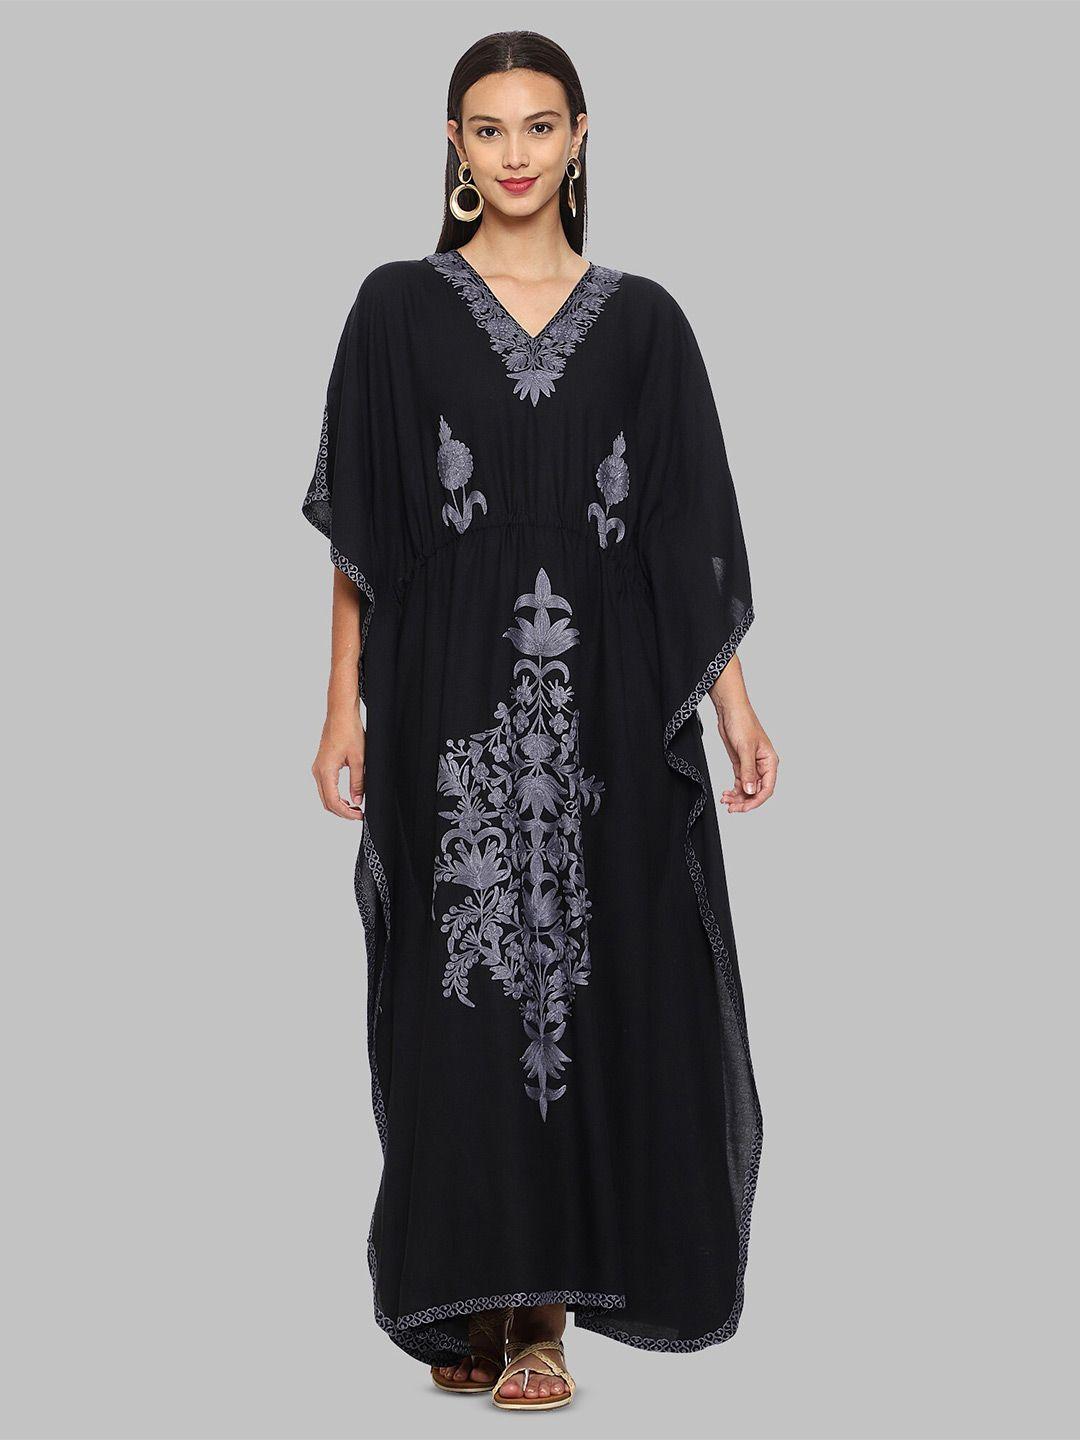 craftbazar black & grey embroidered cape sleeve kaftan maxi dress